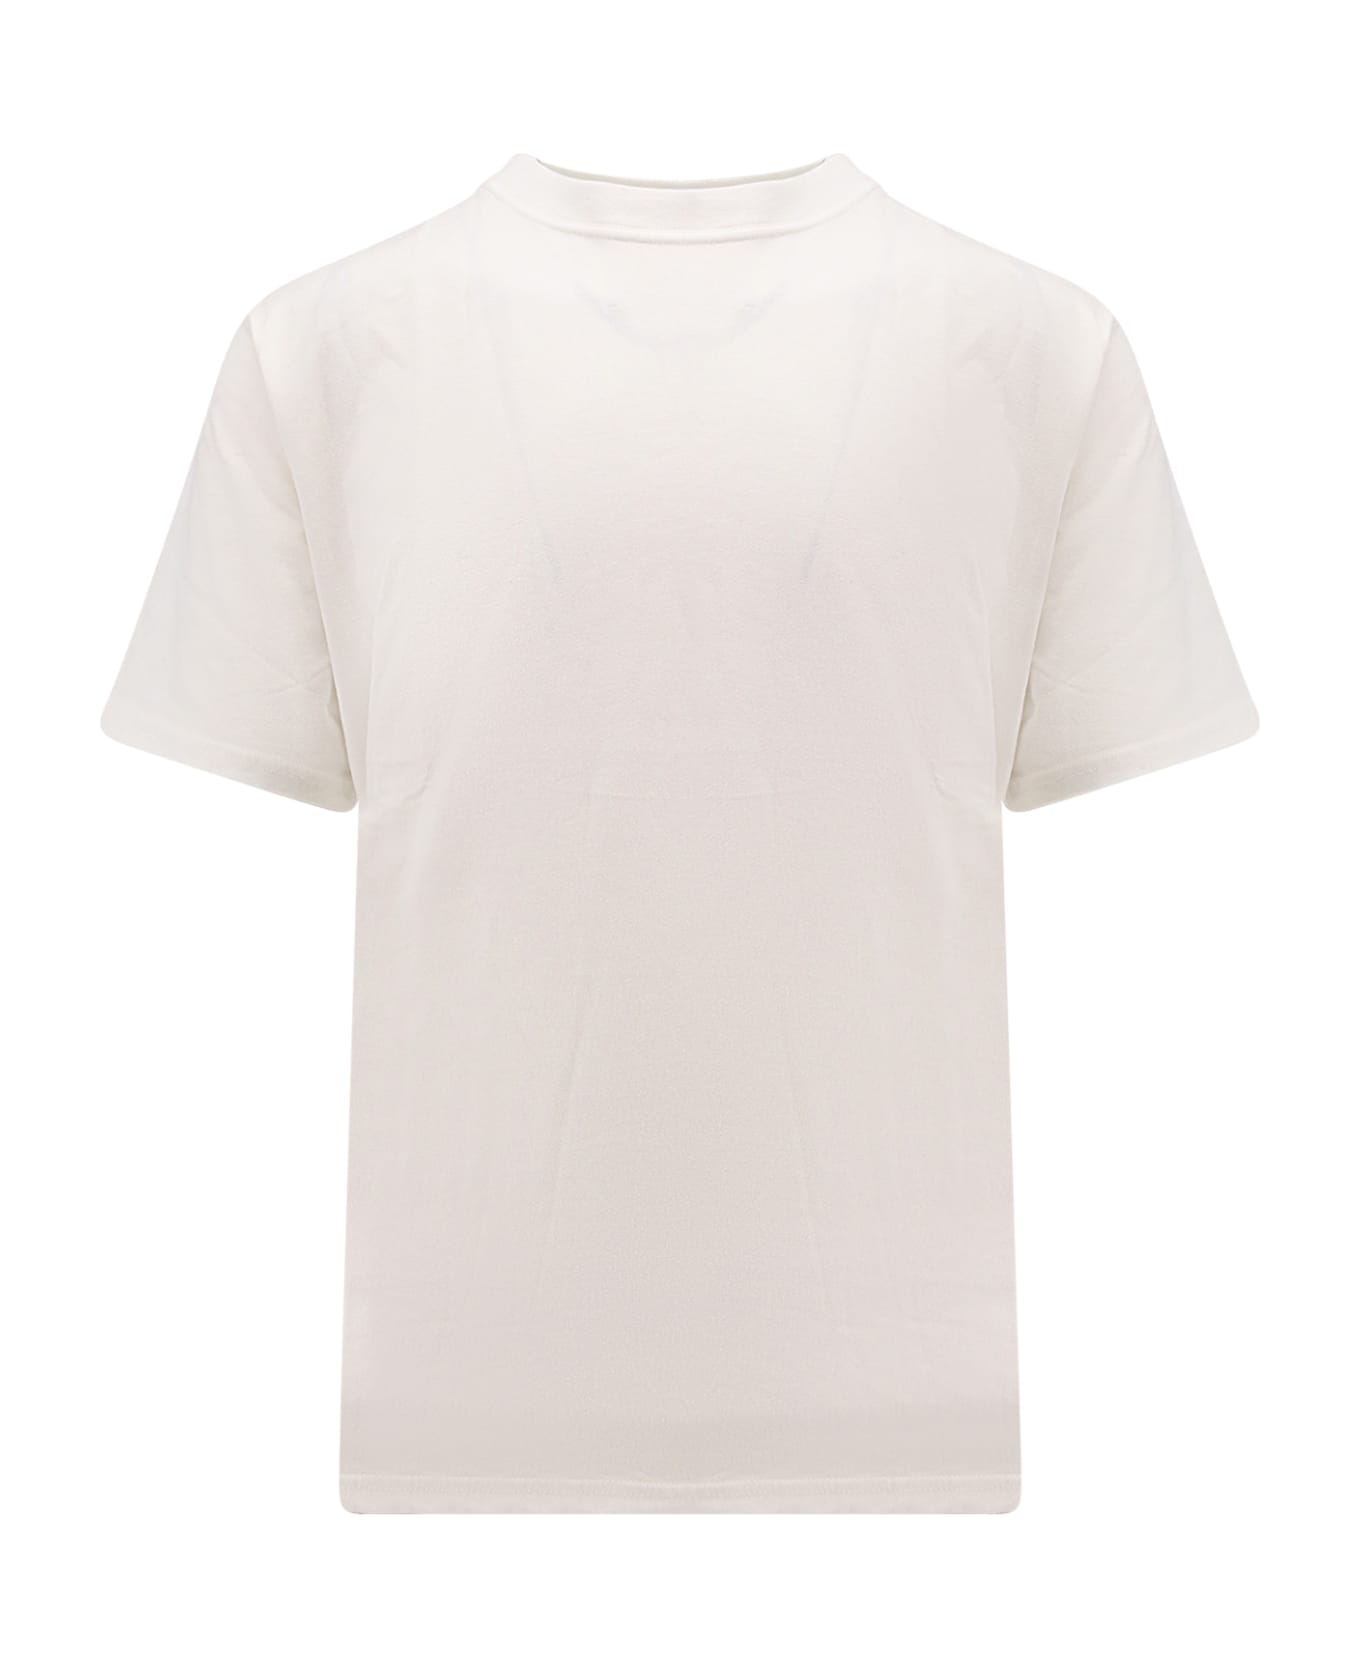 Dickies T-shirt - White シャツ